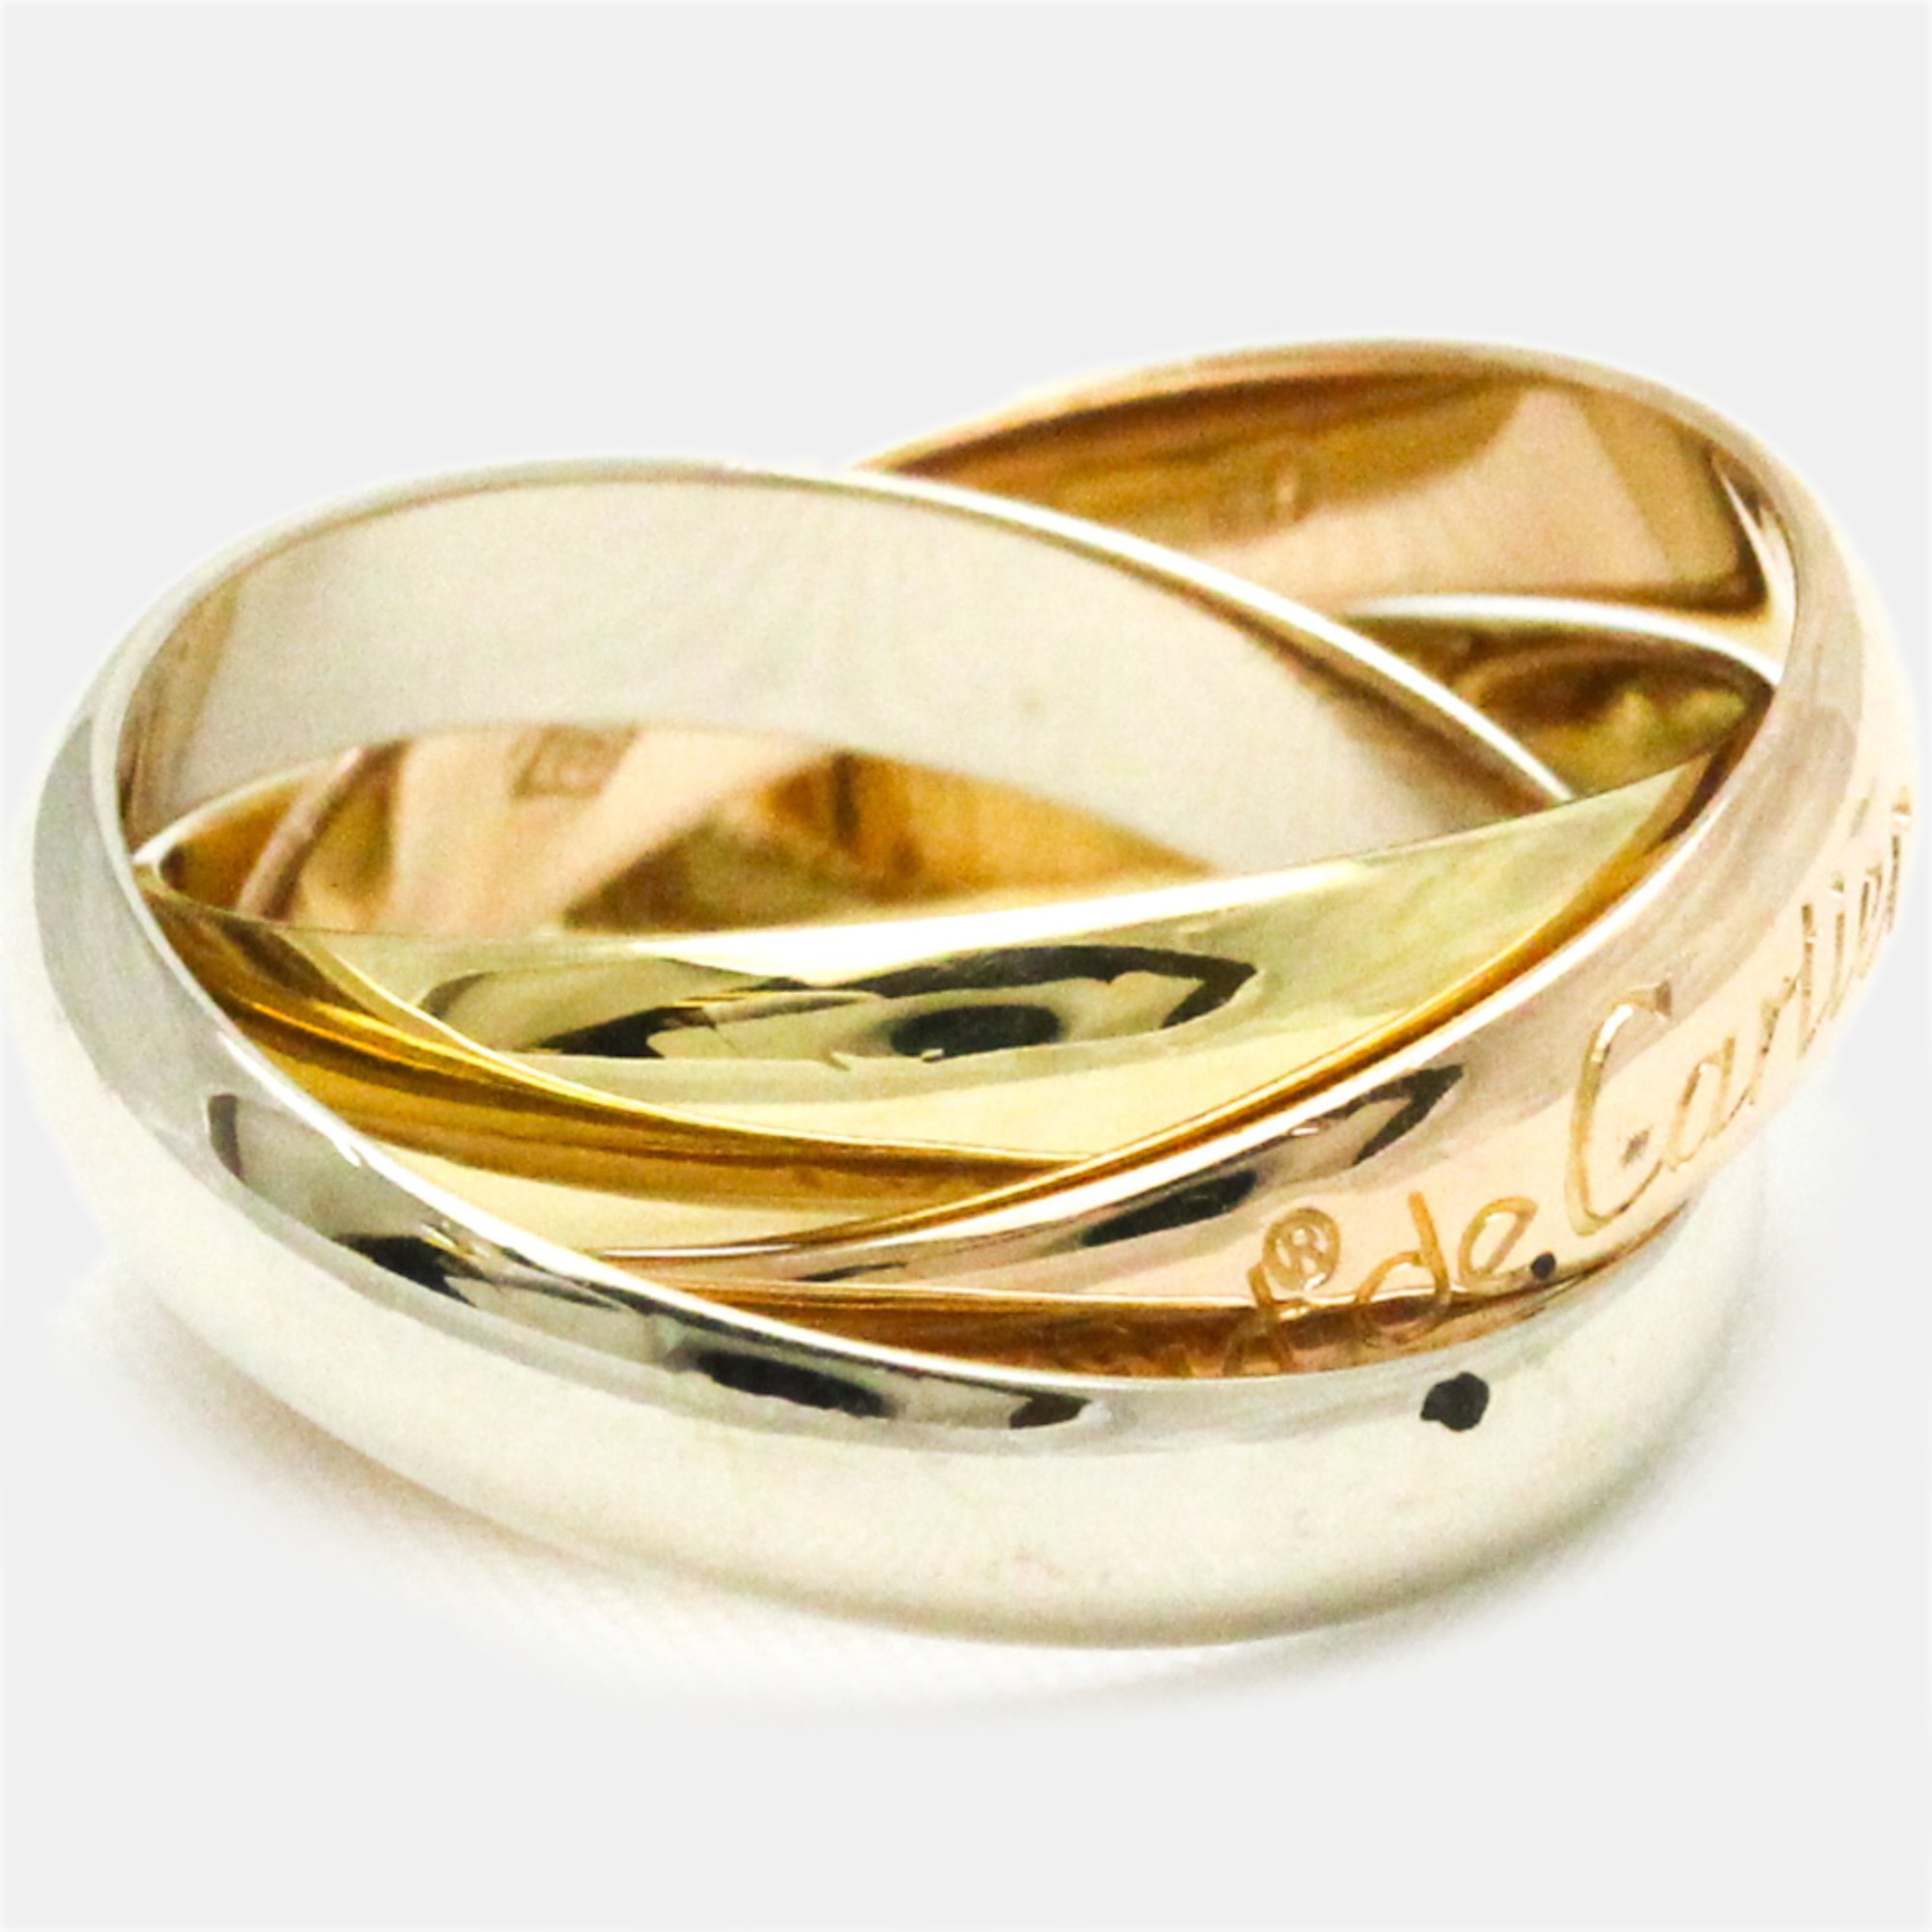 Cartier Les Must De Cartier 18K Yellow Rose And White Gold Ring EU 49